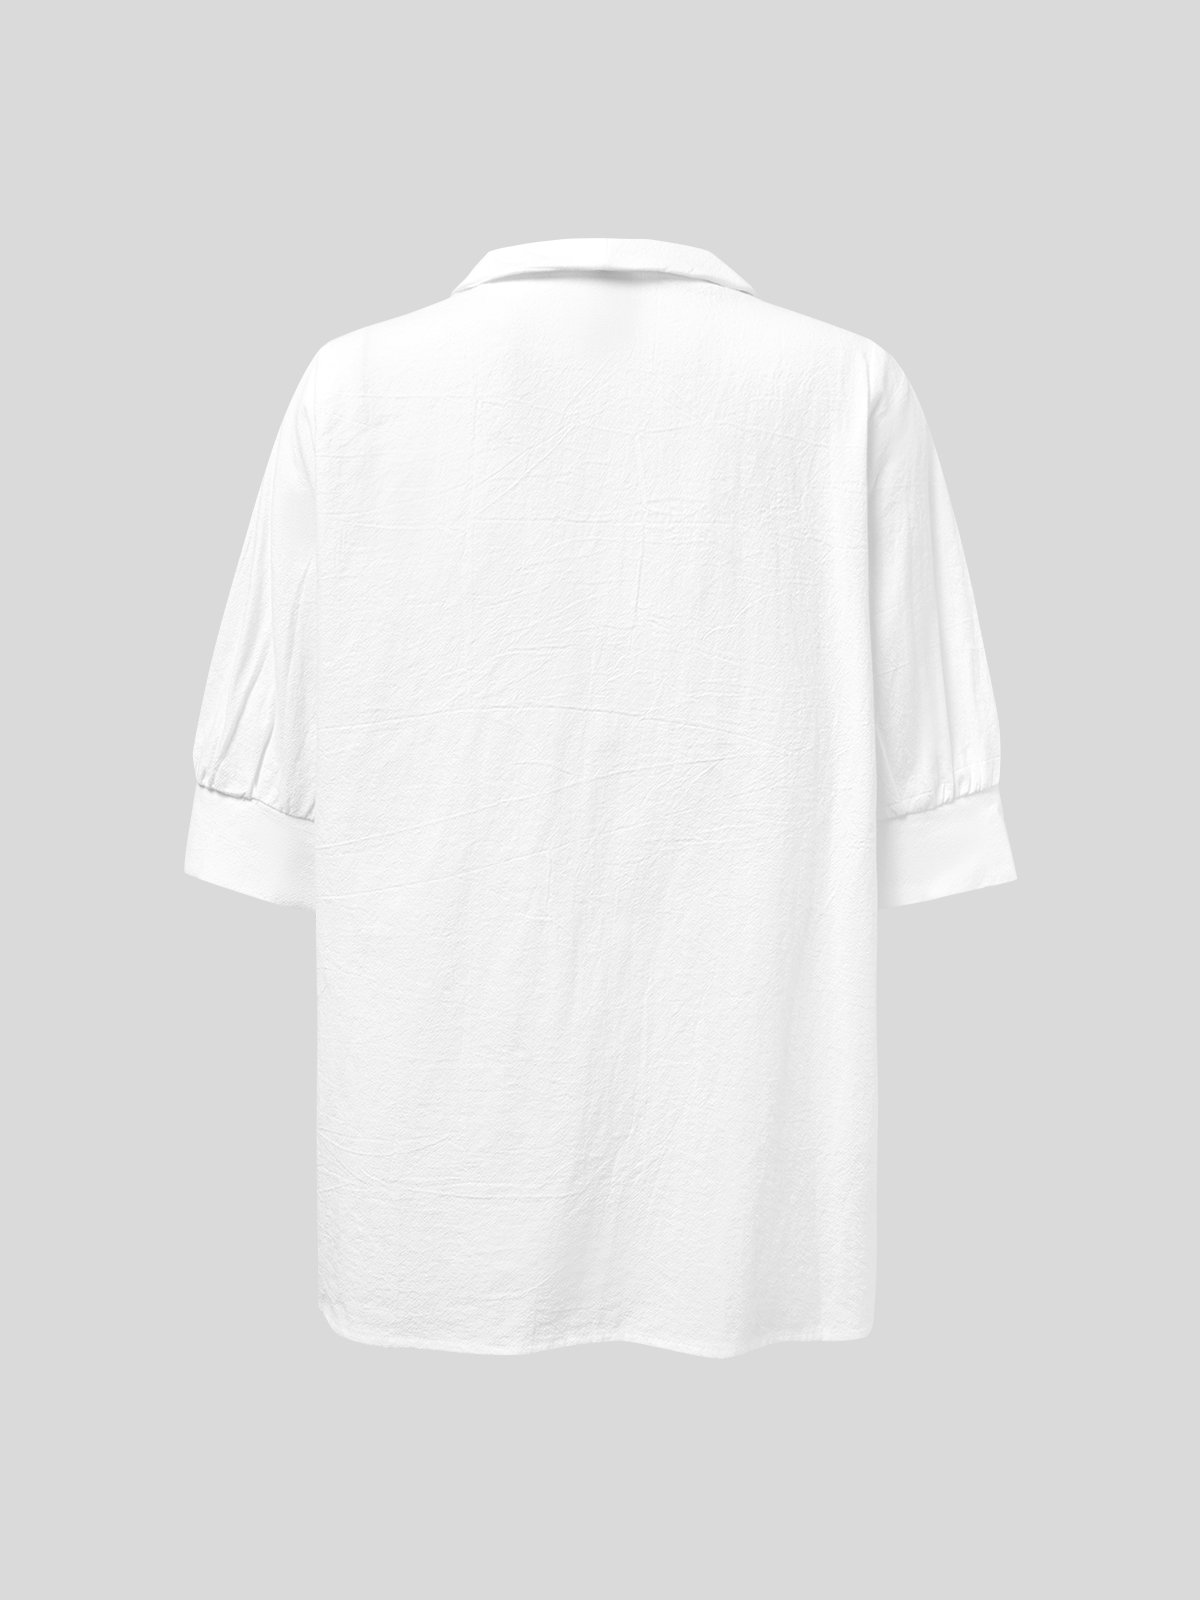 Women's Shirt Blouse Cotton Linen Blouse White Button Short Sleeve ...